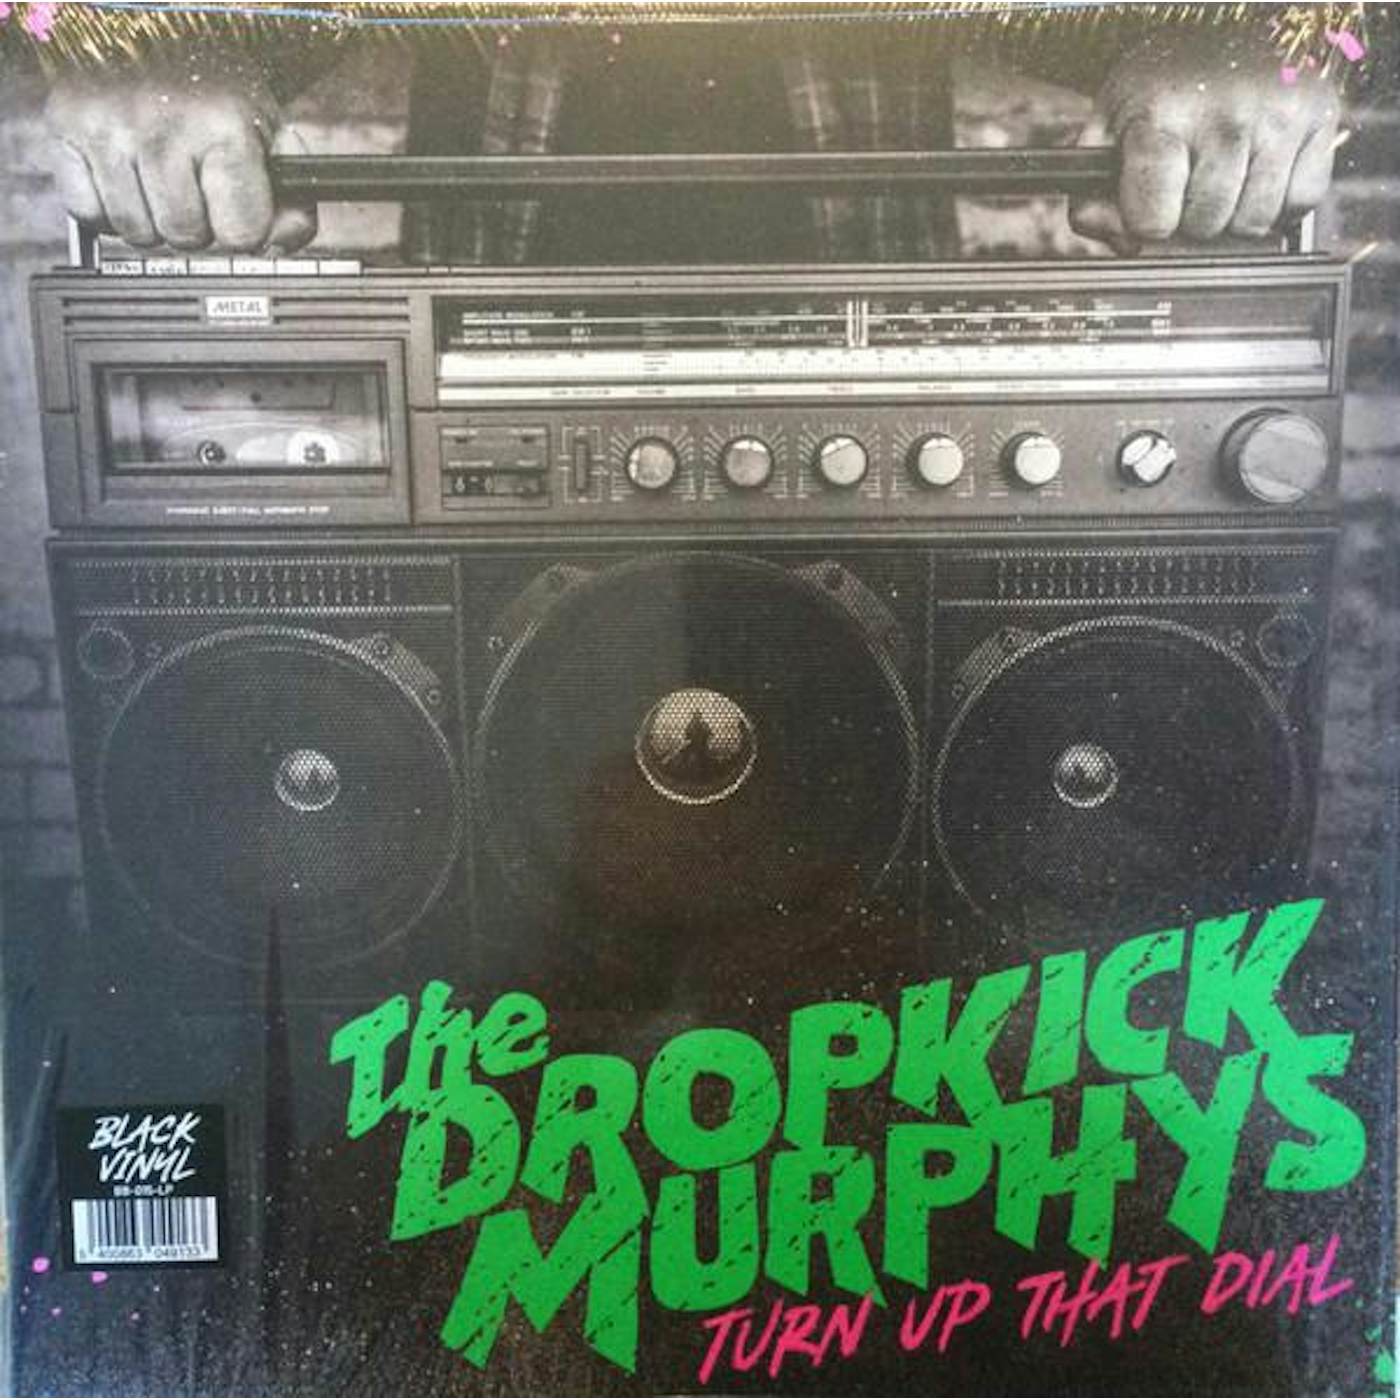 Dropkick Murphys TURN UP THAT DIAL Vinyl Record